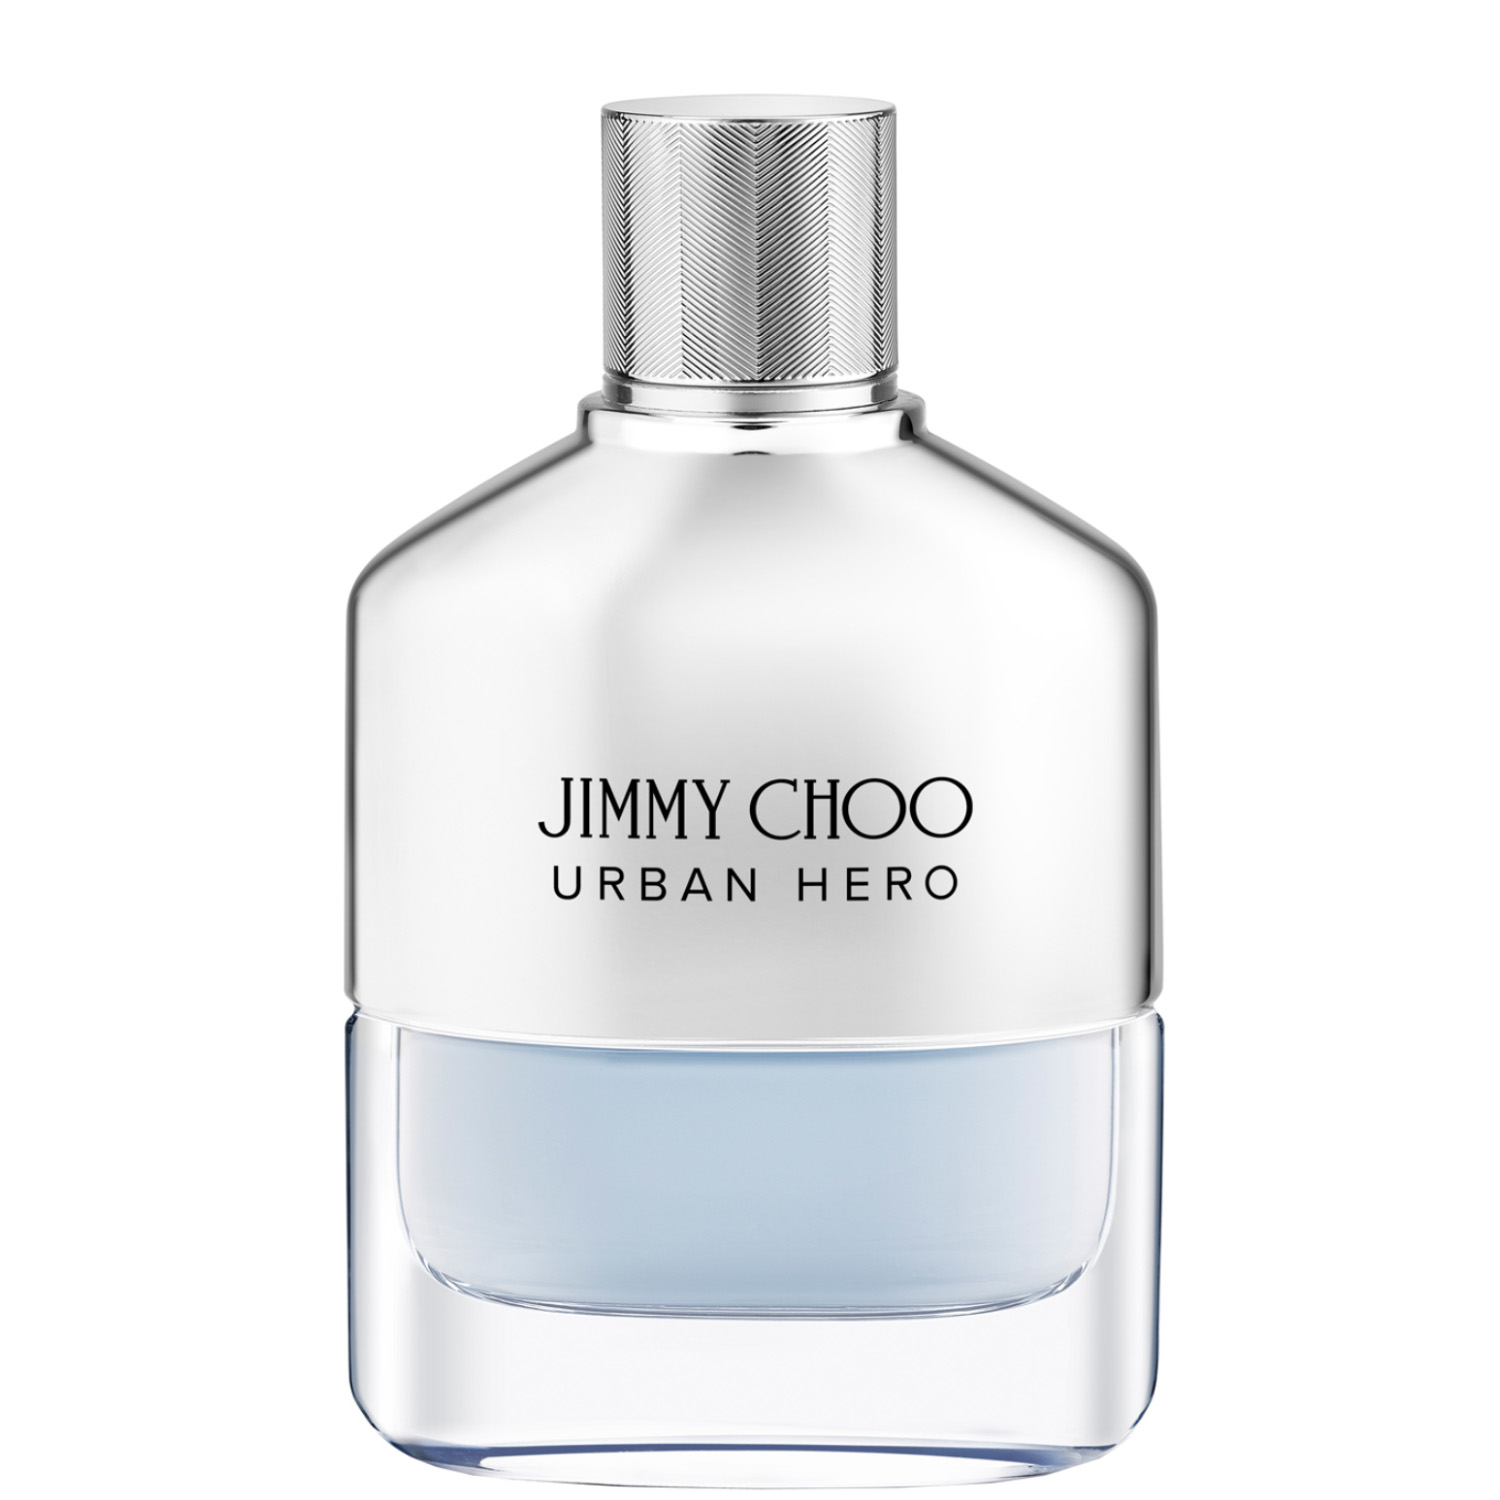 Jimmy Choo Urban Hero Eau de Parfum 100ml